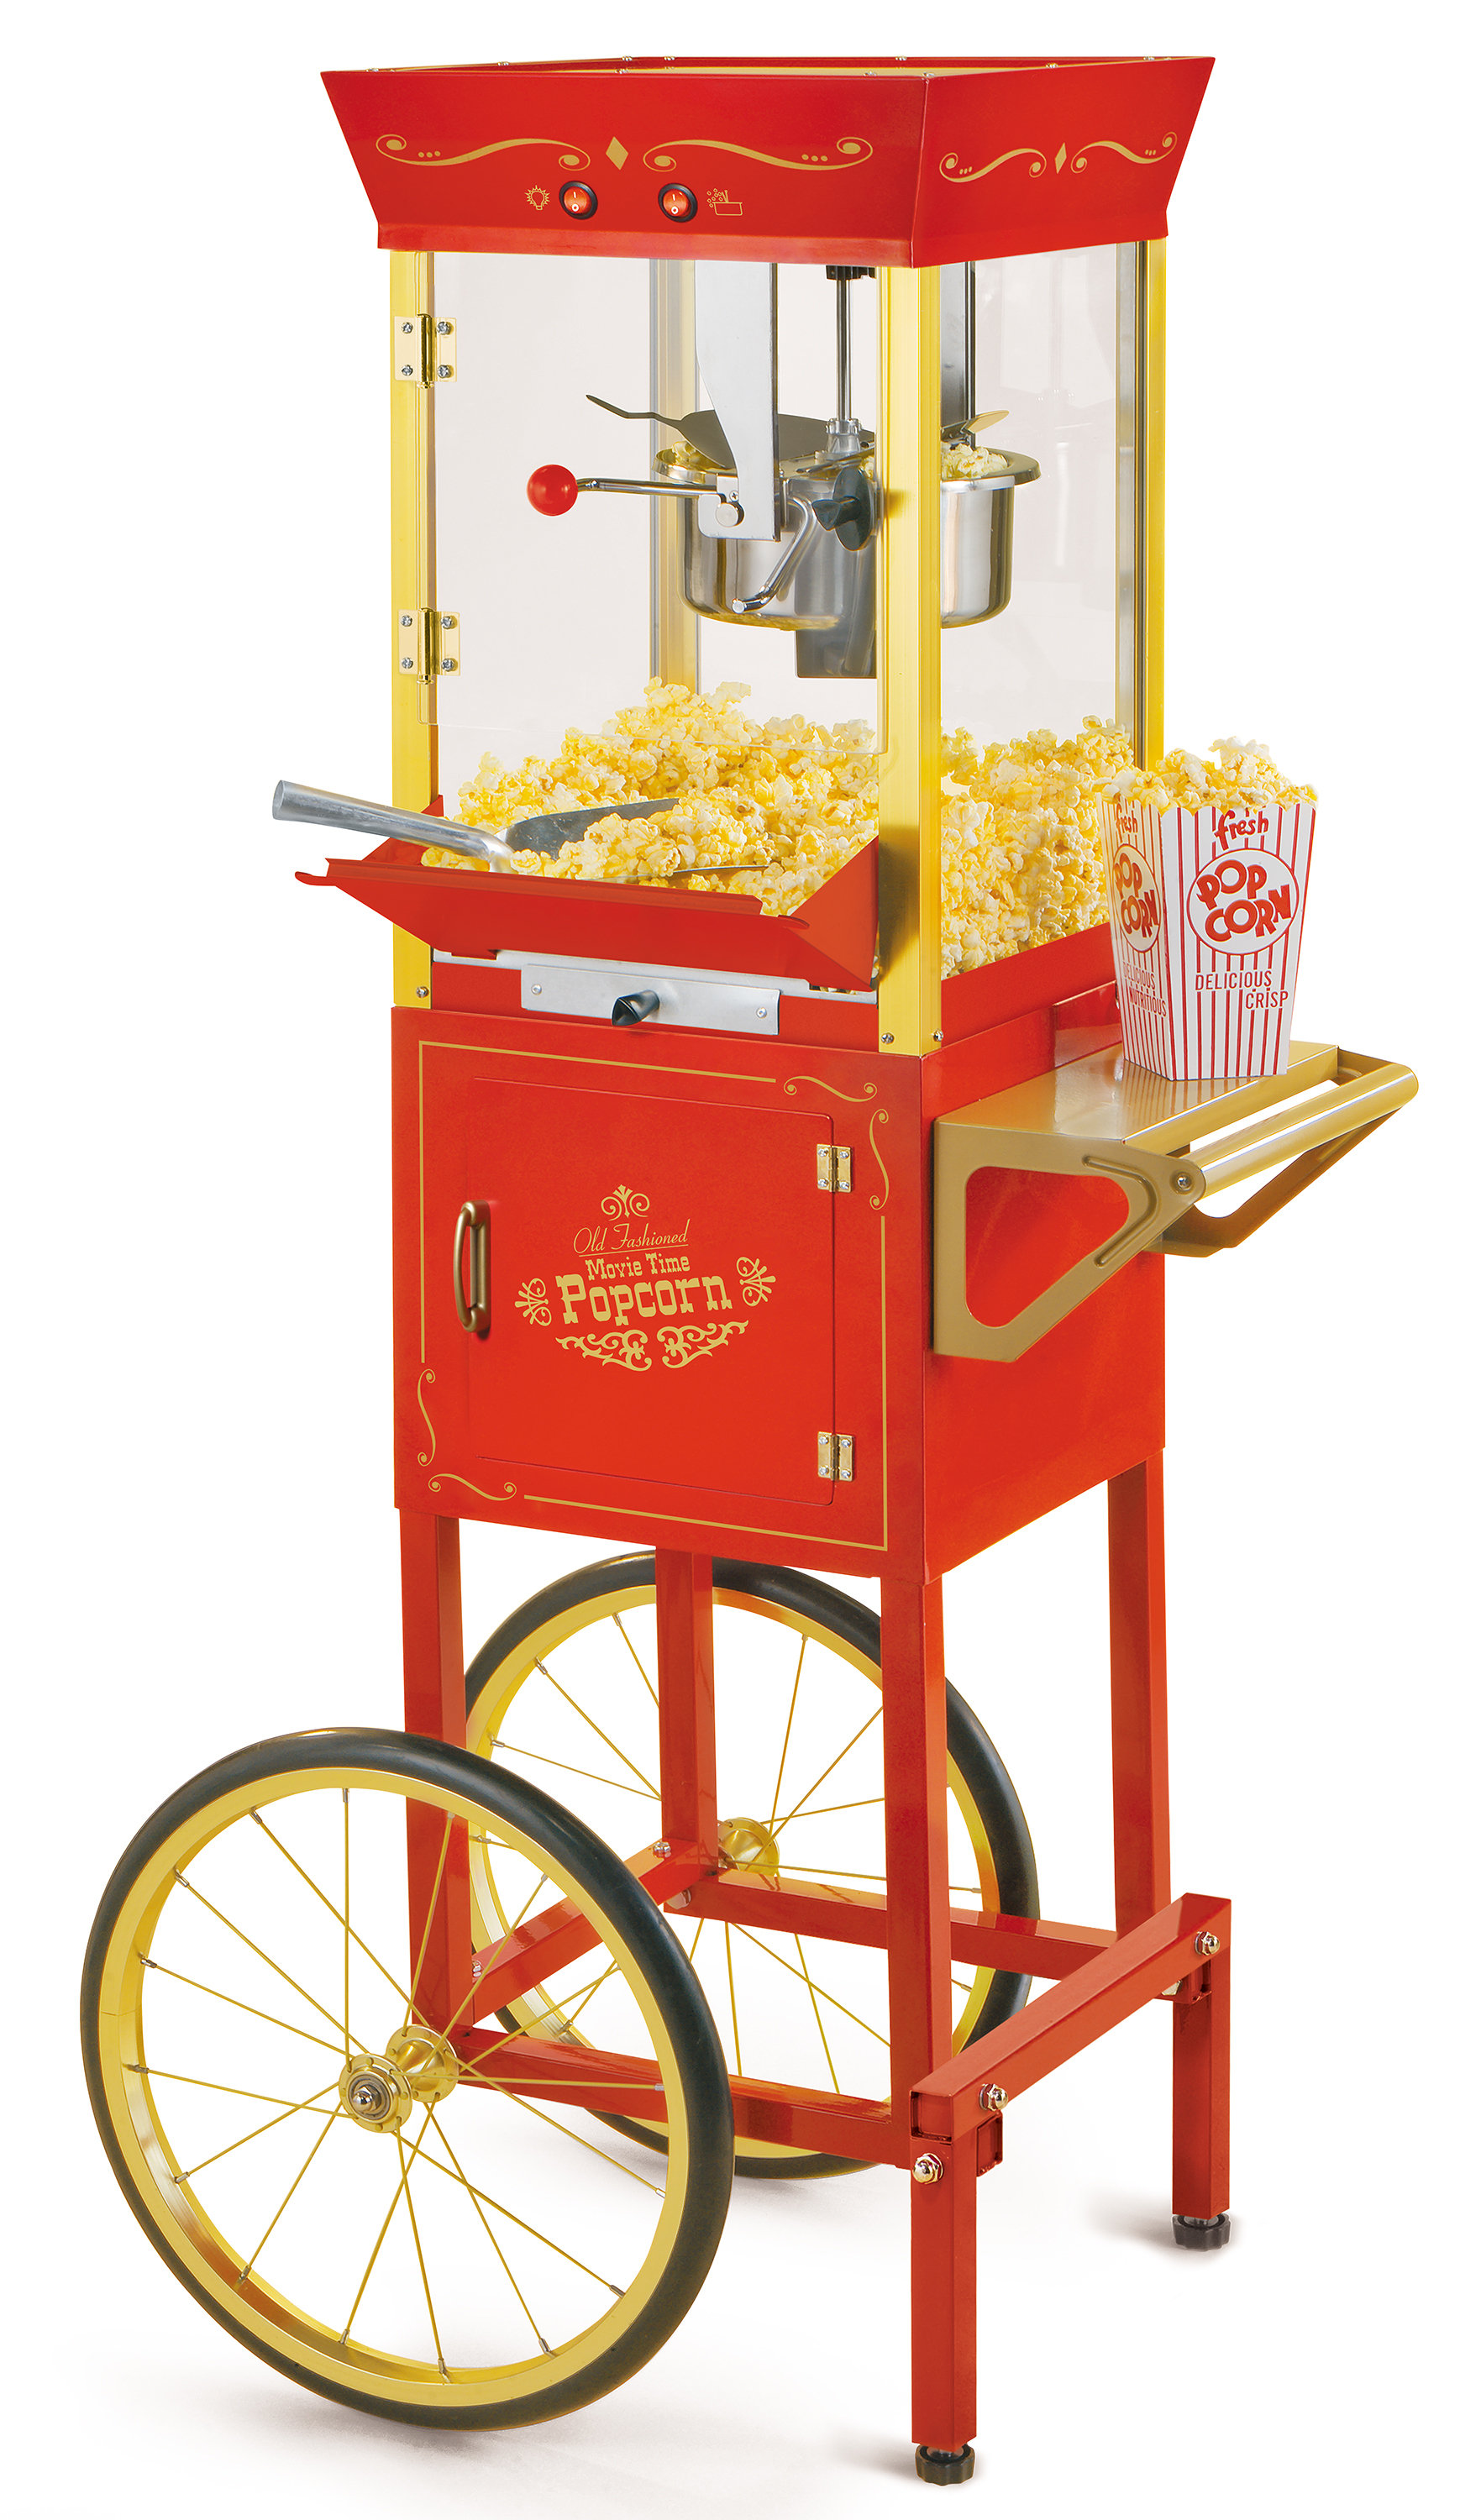 Dash Popcorn Ball Maker:  Reviews